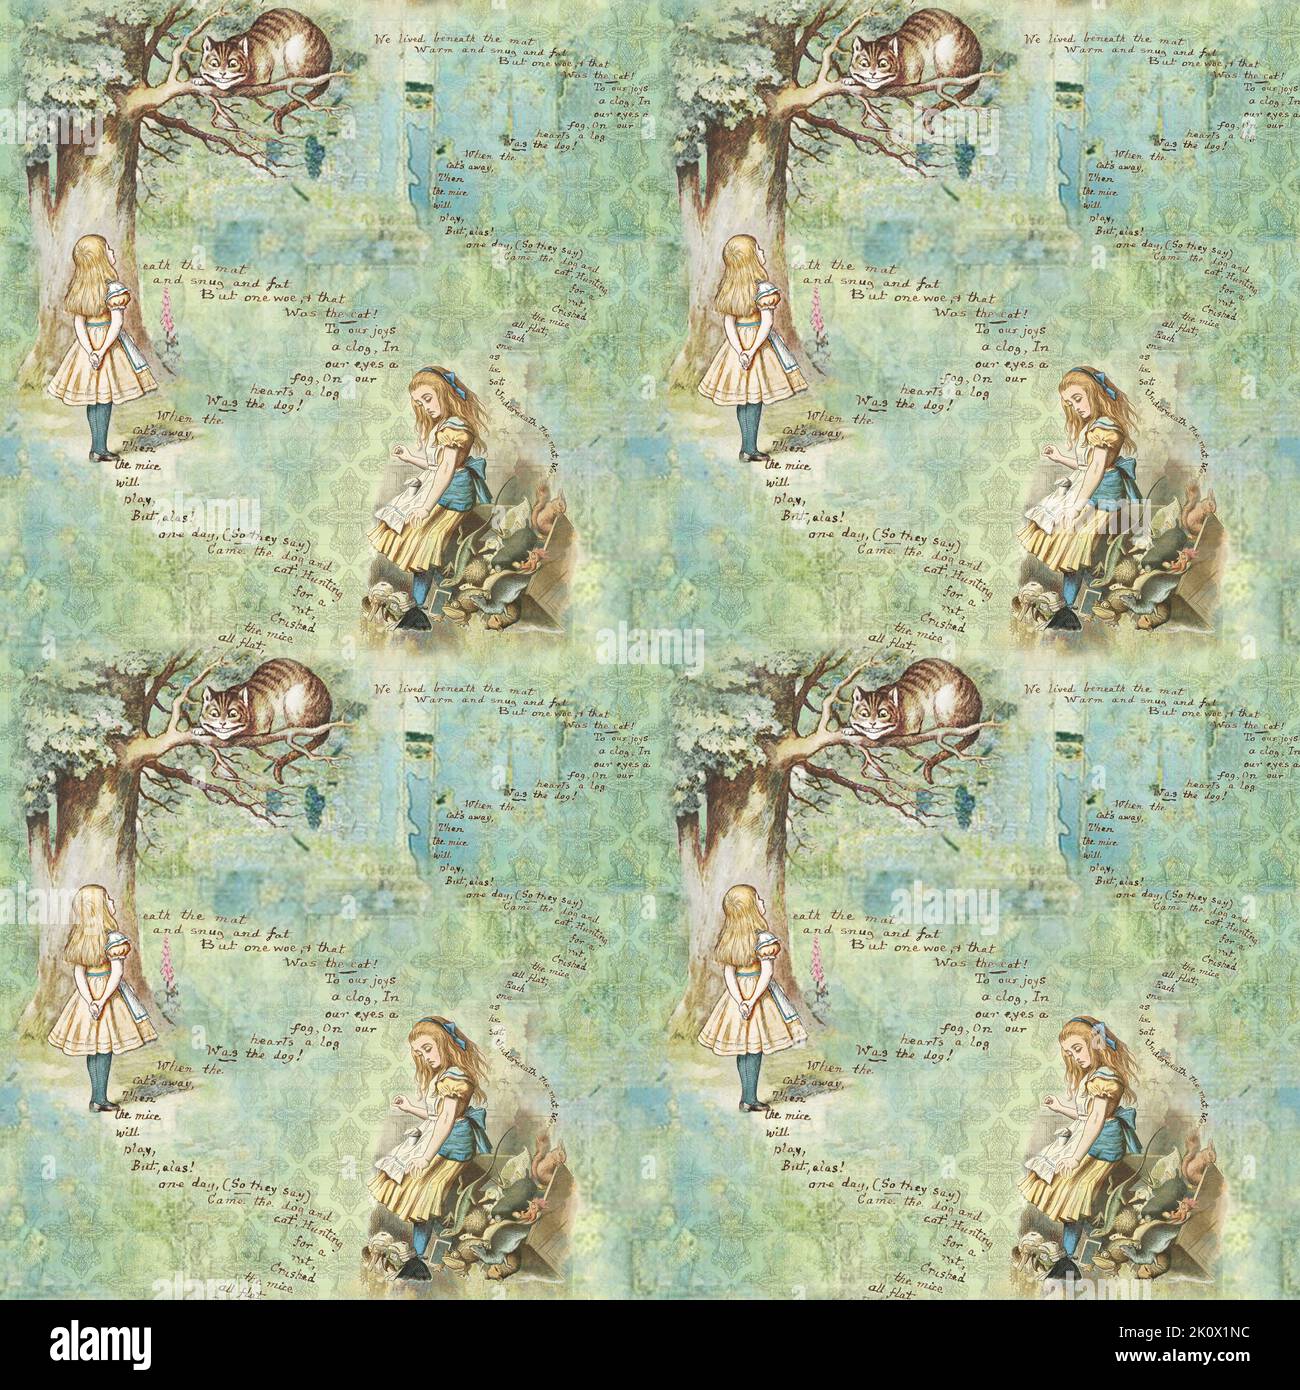 Alice Wonderland Background Images – Browse 5,094 Stock Photos